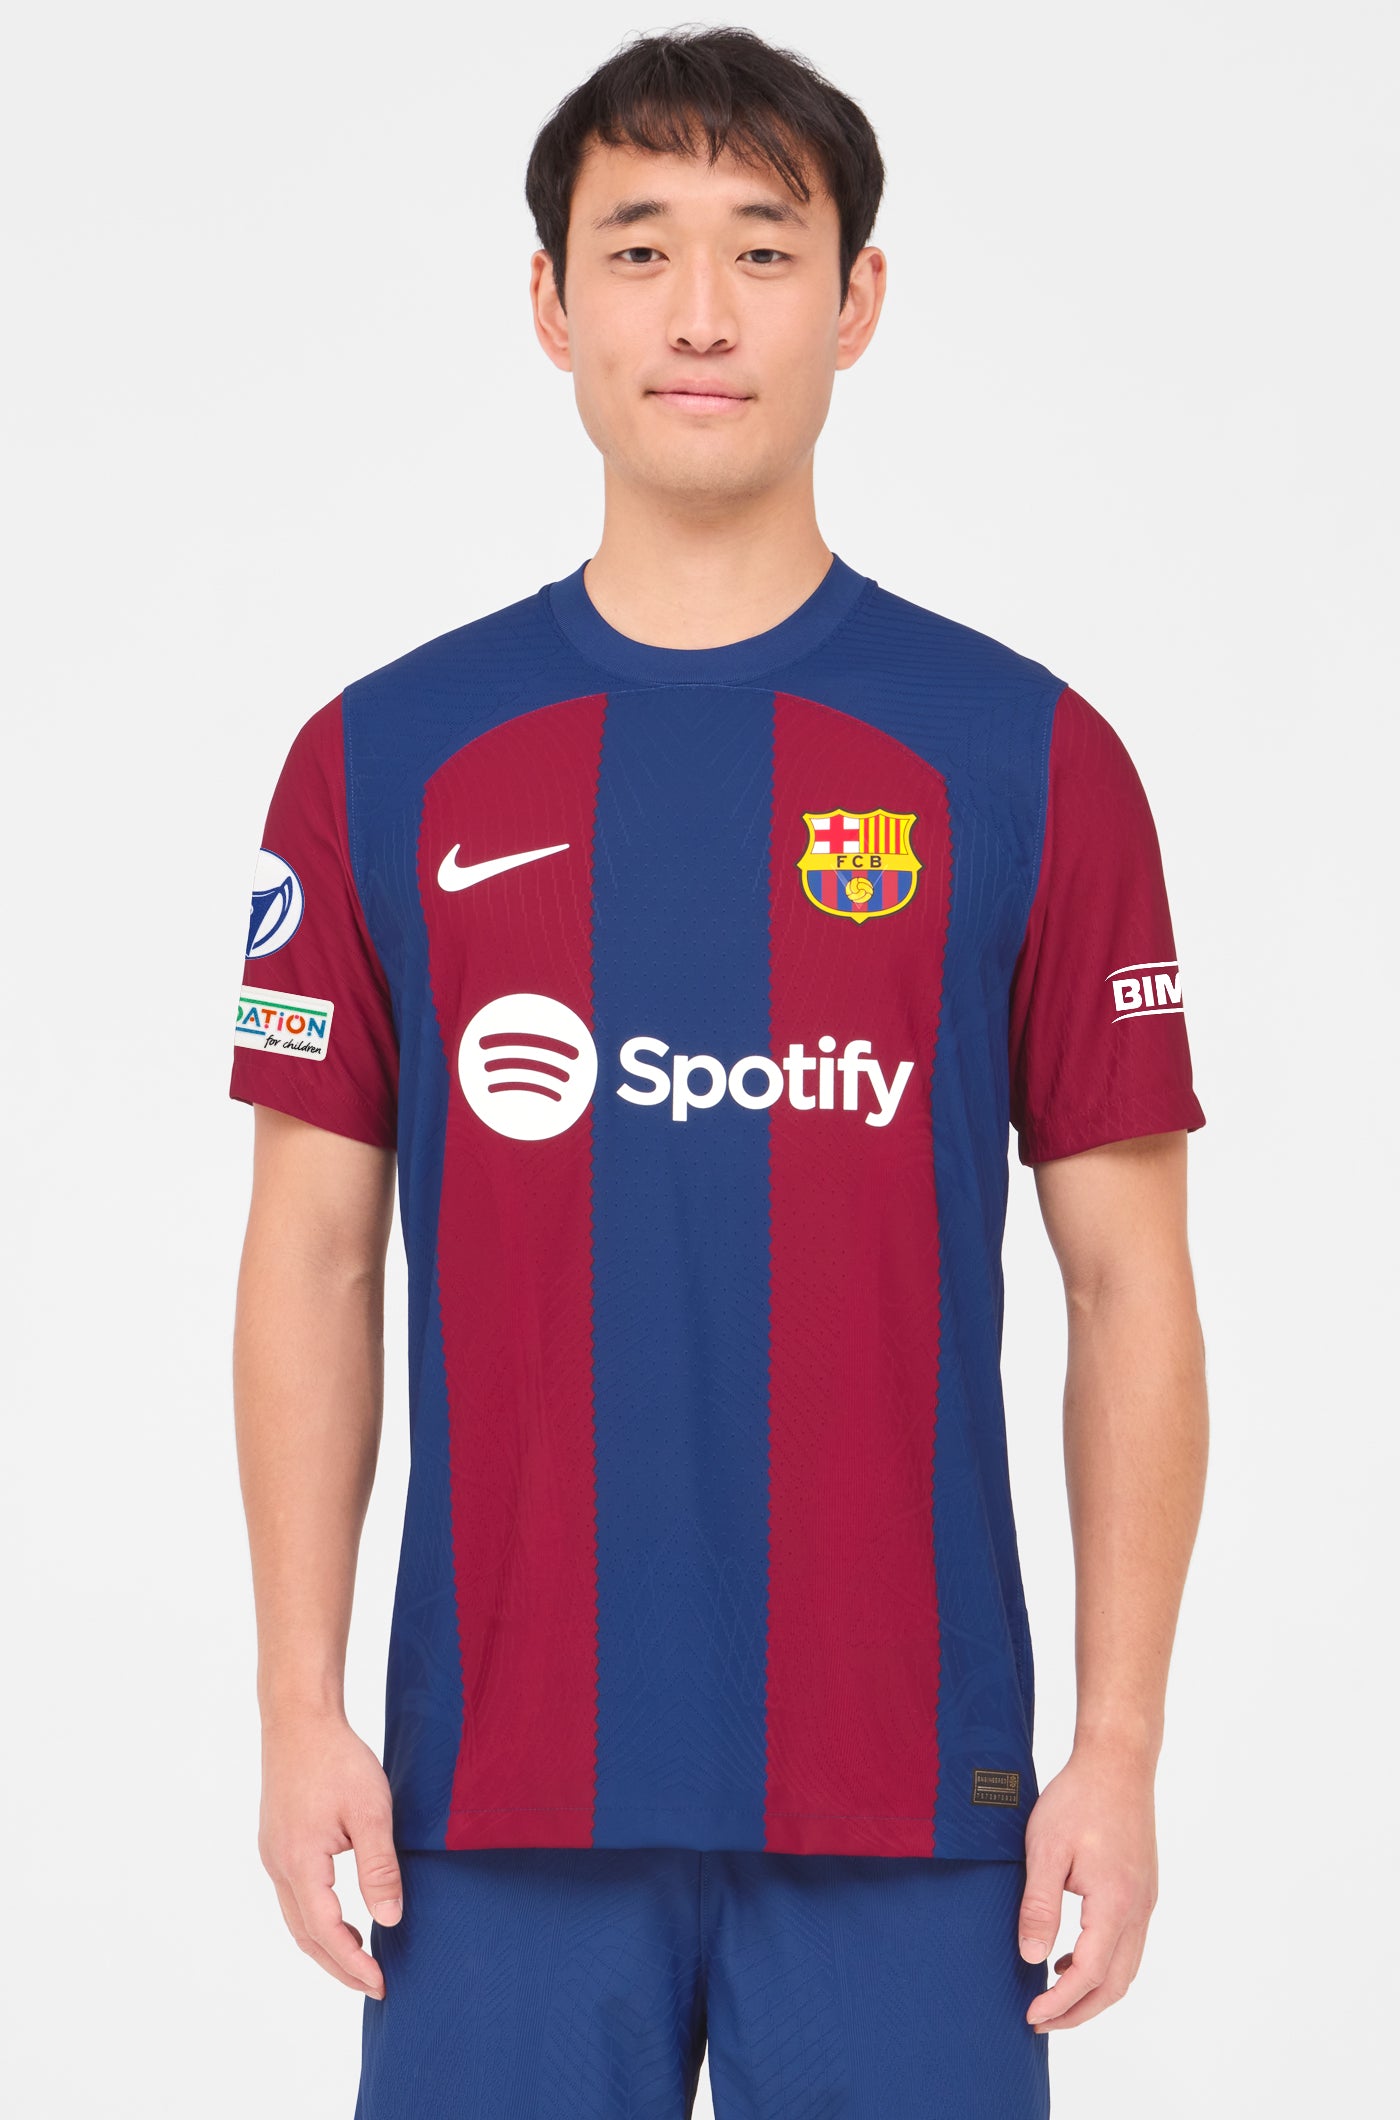 UWCL FC Barcelona home shirt 23/24 Player's Edition  - MARIONA